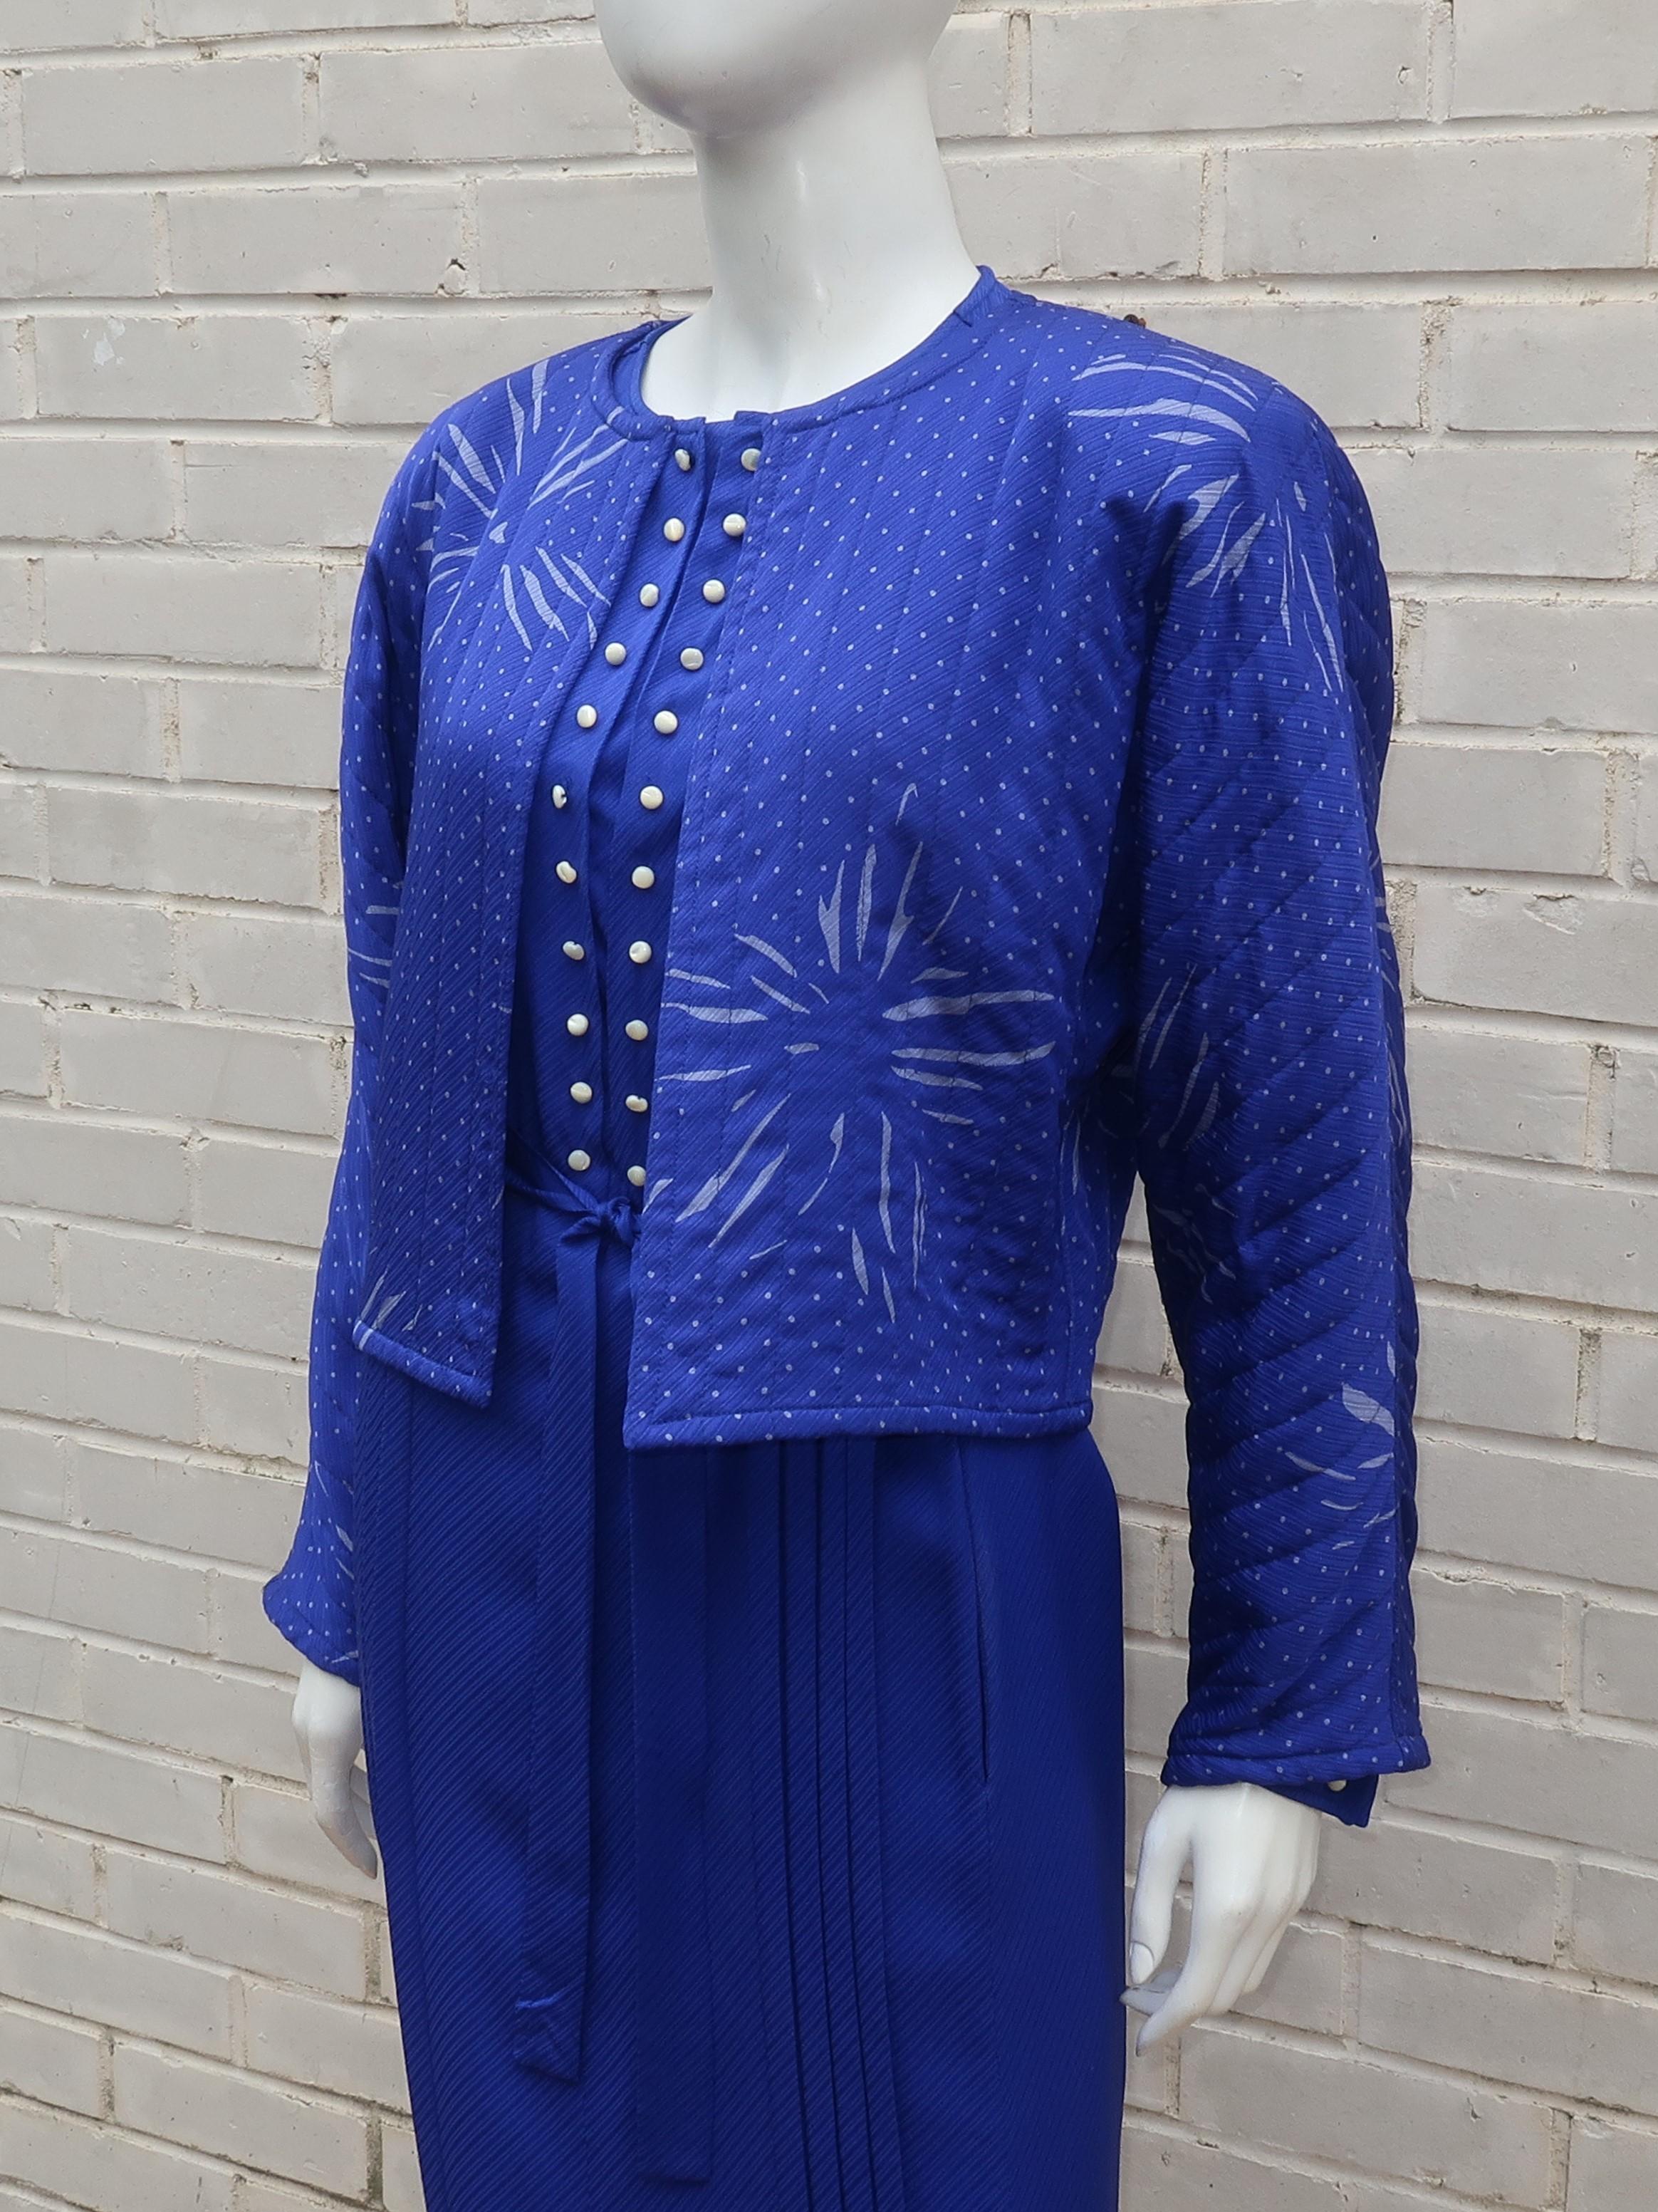 Women's Ungaro Royal Blue Silk Dress & Quilted Jacket Set, C.1980 For Sale